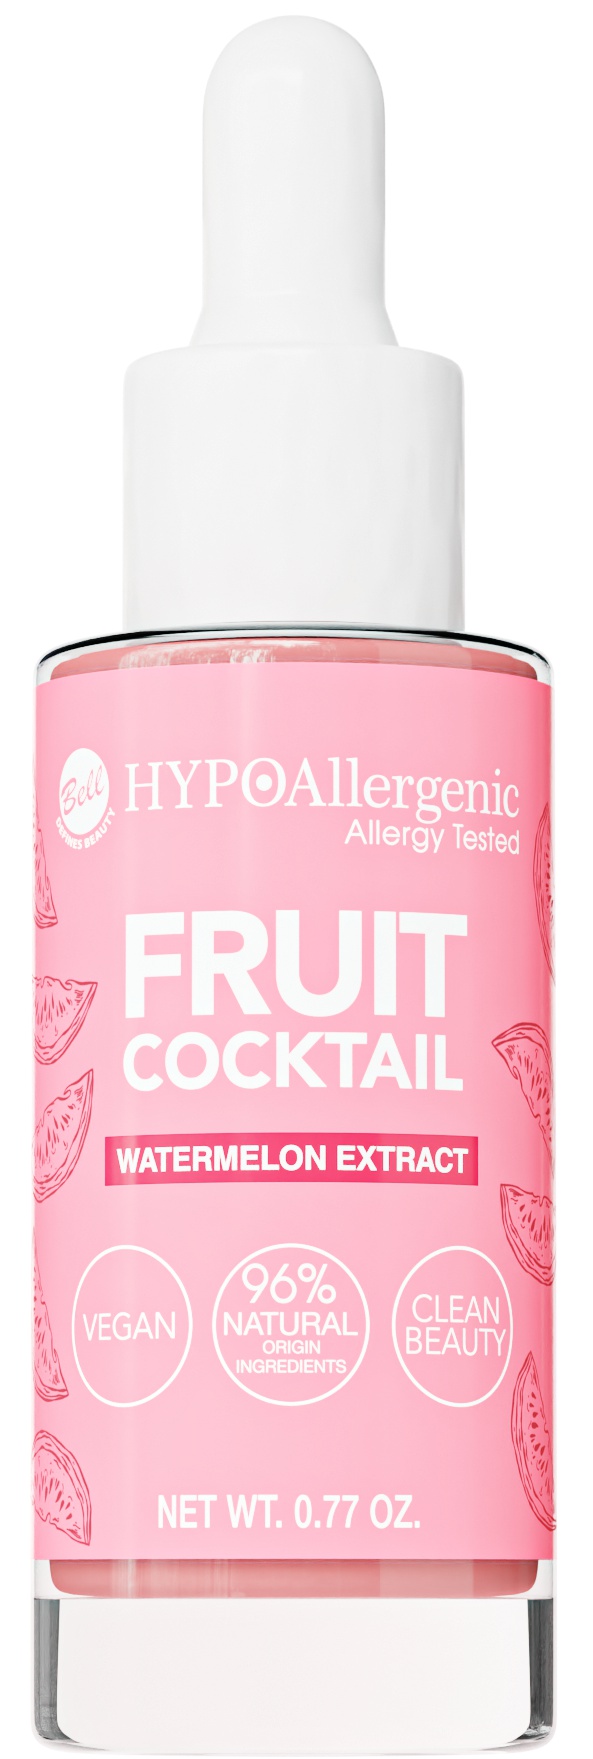 Bell HYPOAllergenic Fruit Cocktail